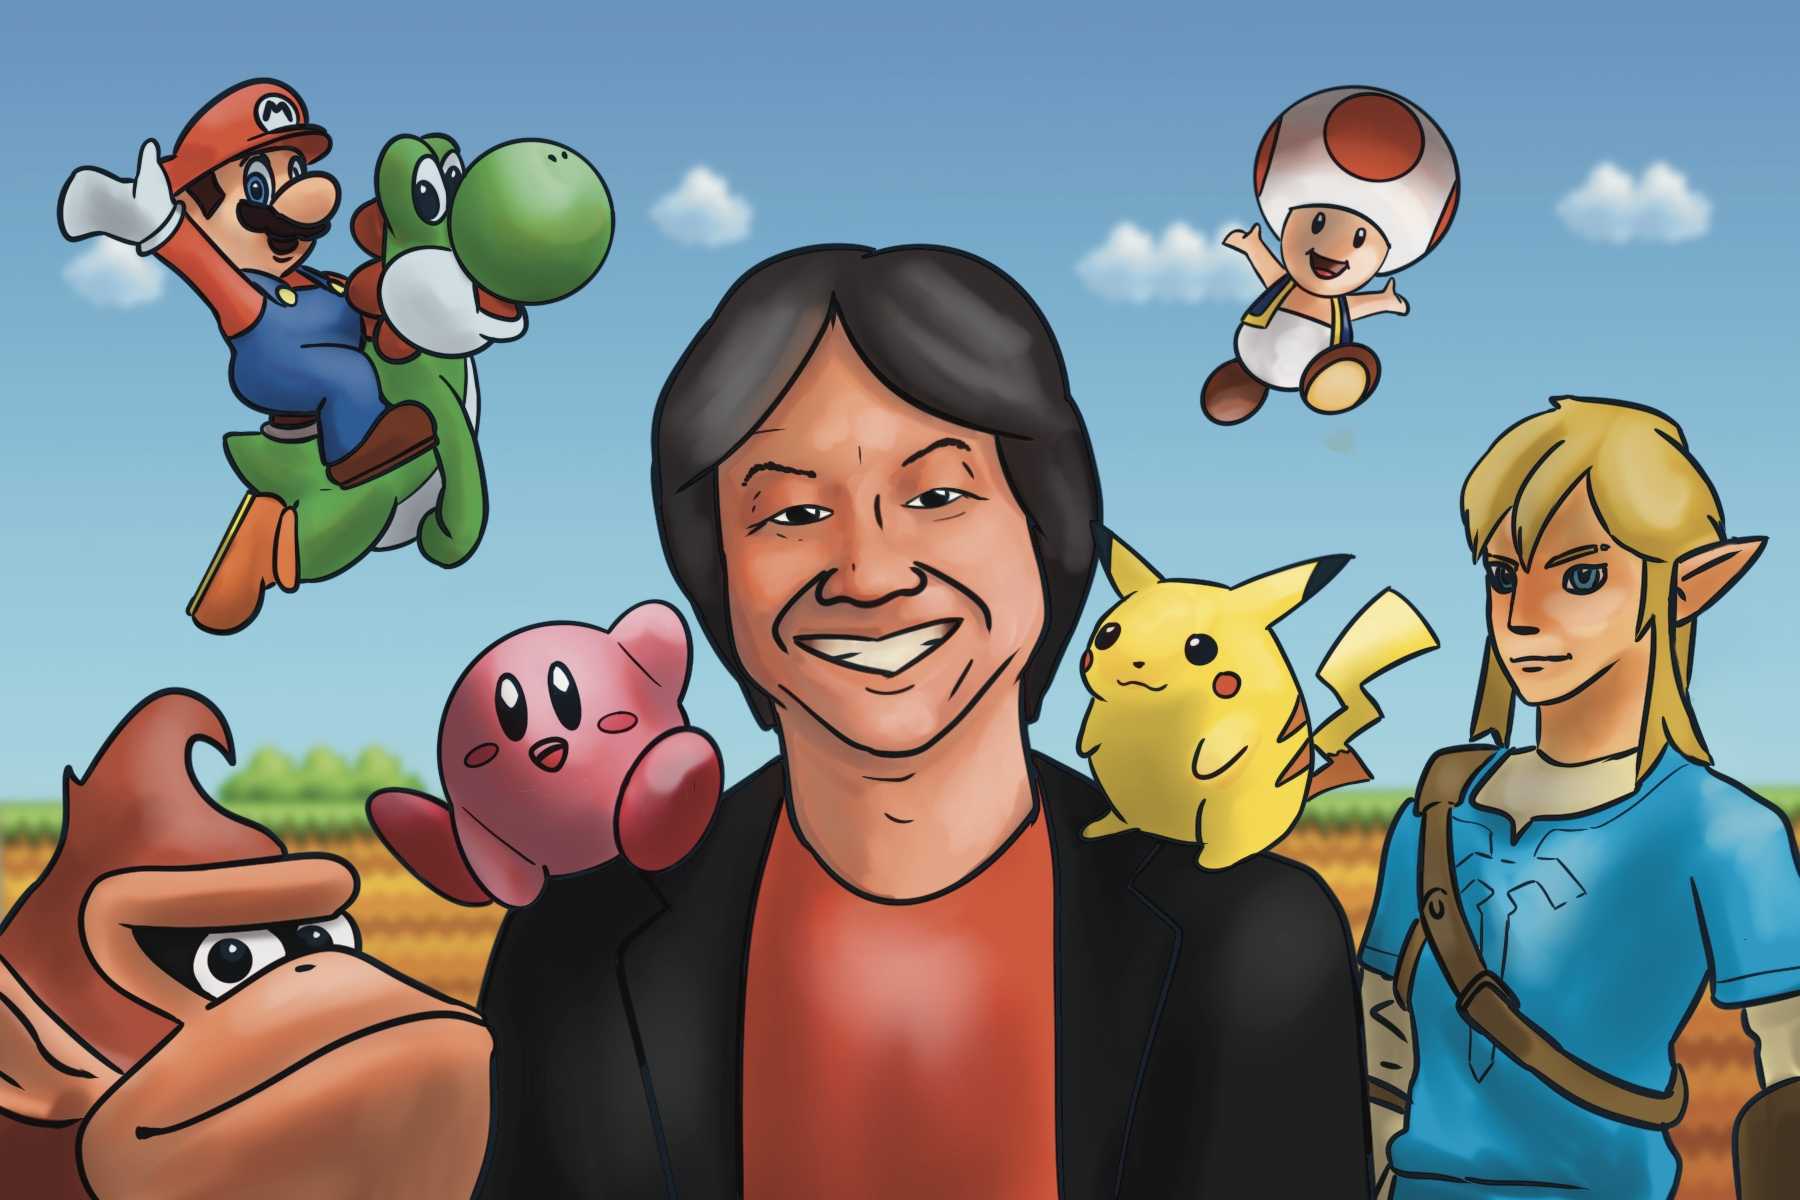 Shigeru Miyamoto Says Donkey Kong Redesigned To Be More Comical